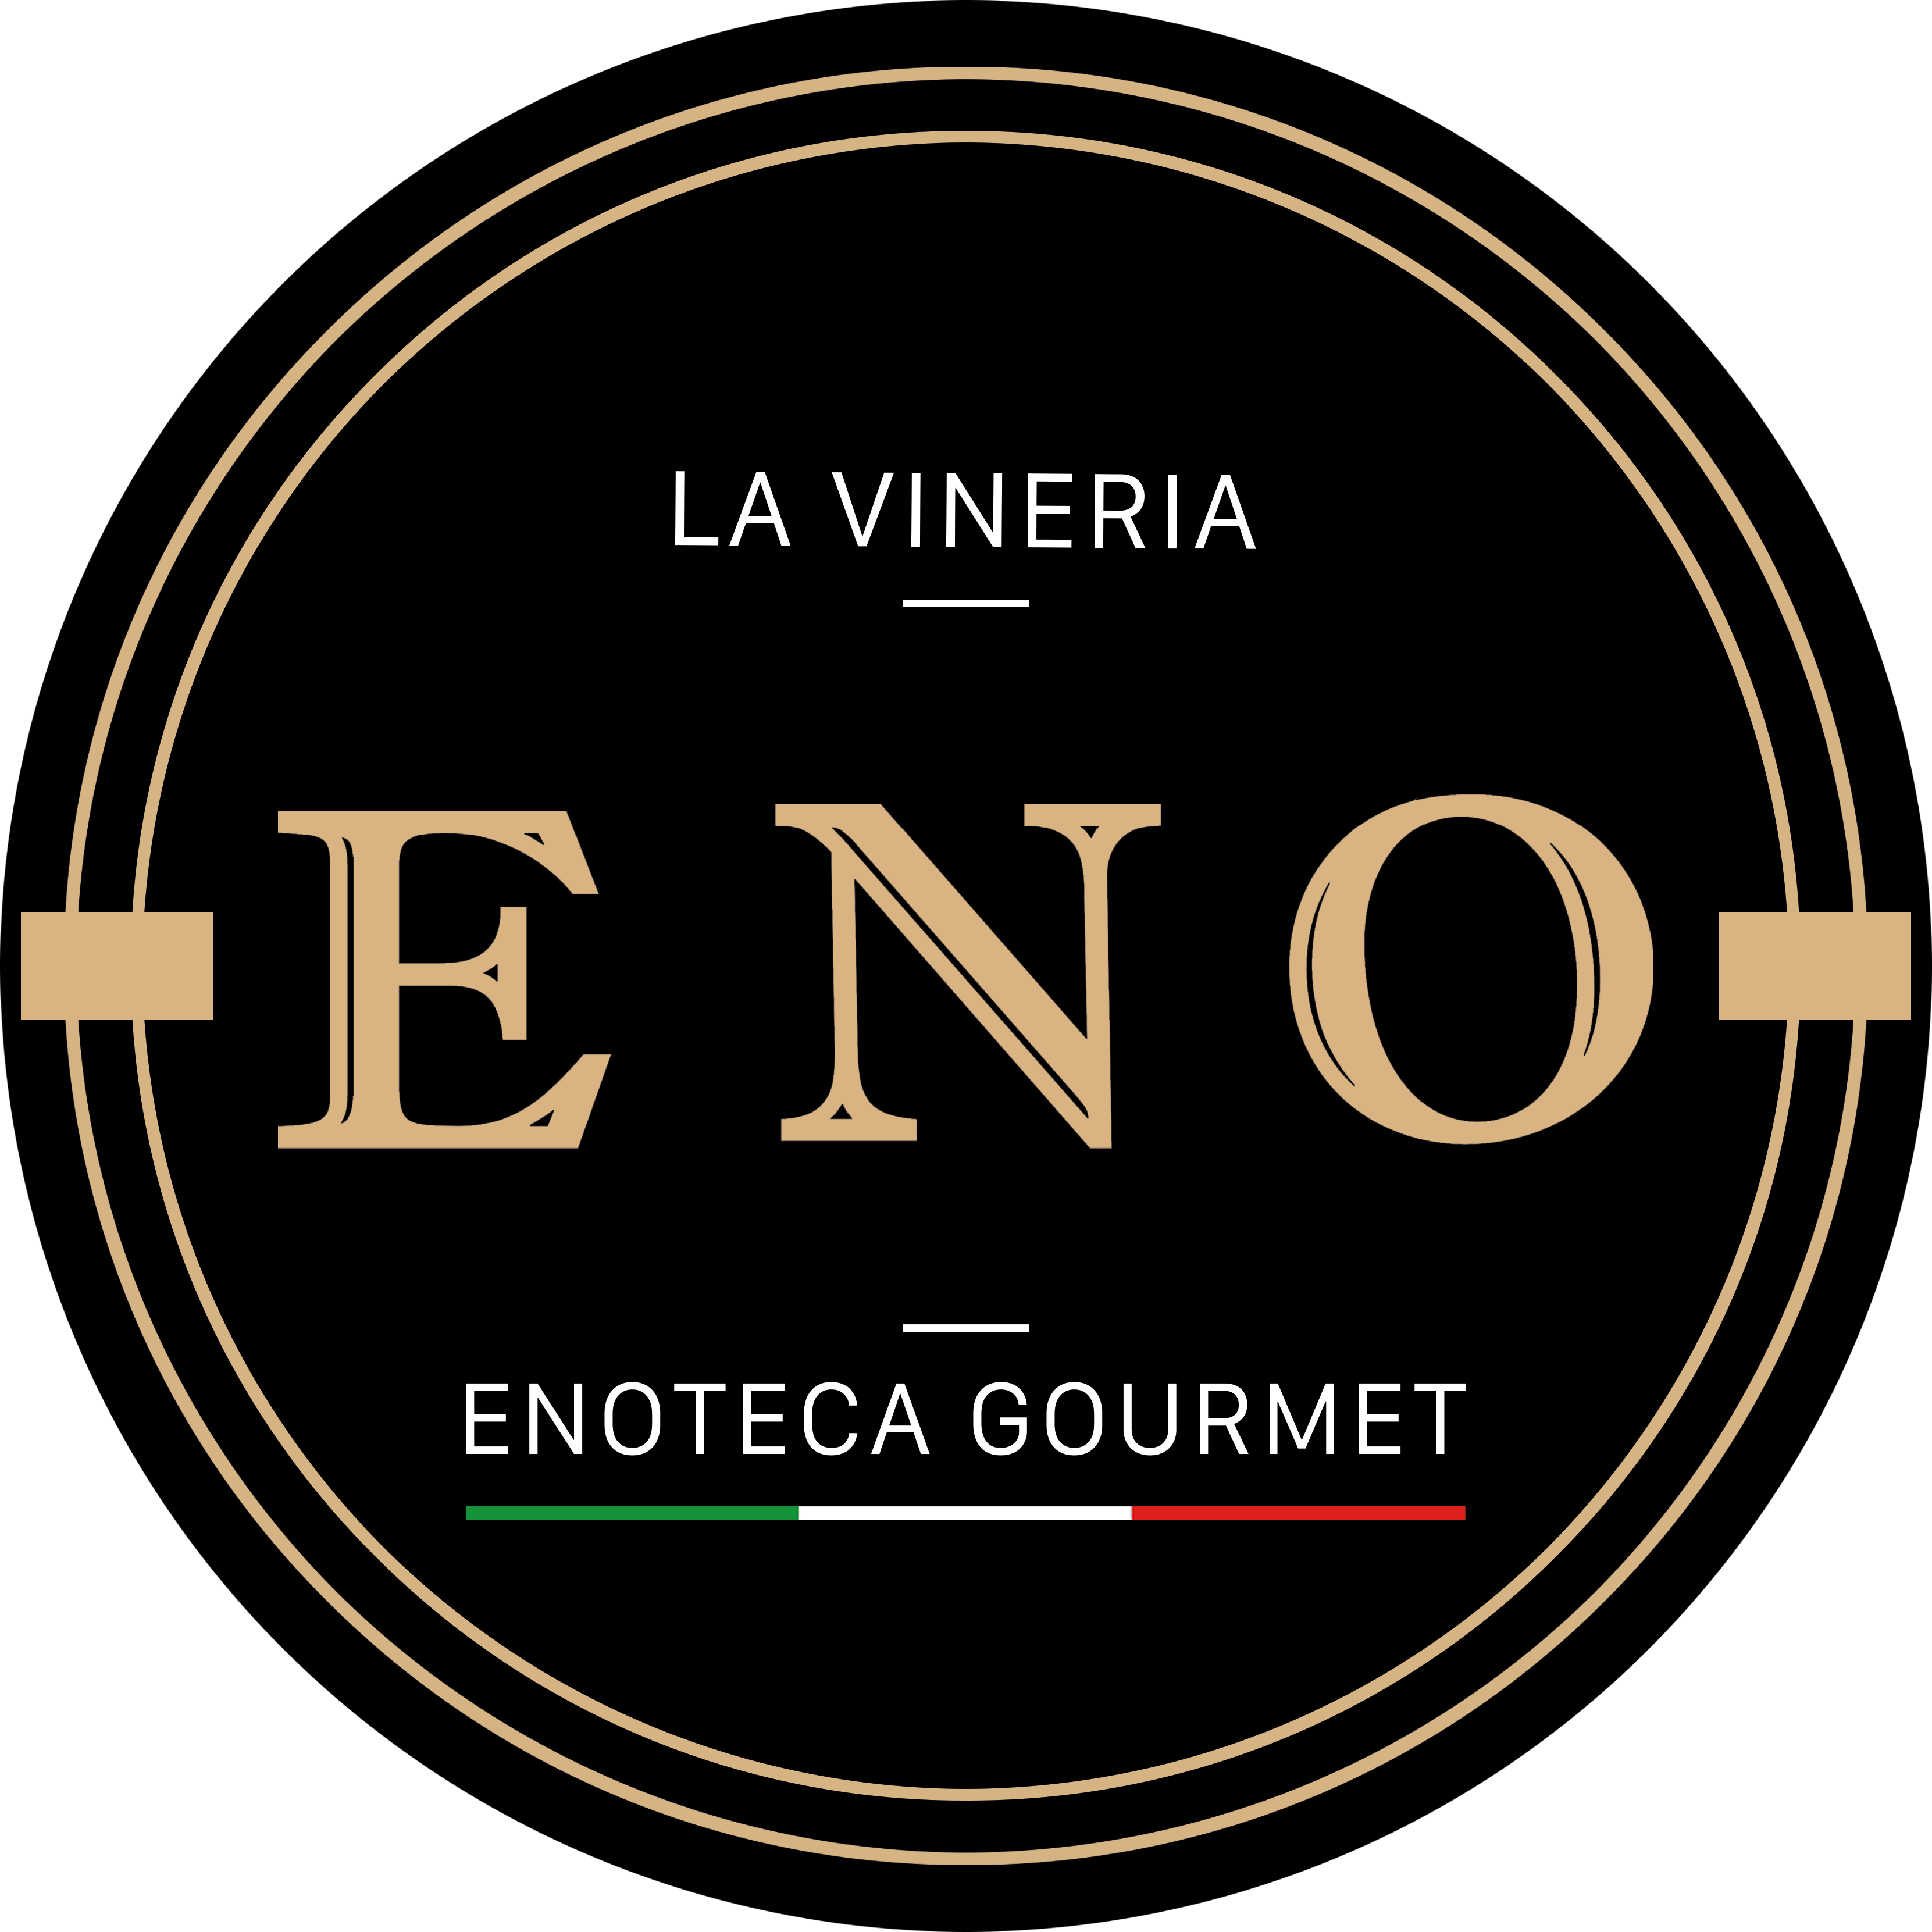 ENO Logo